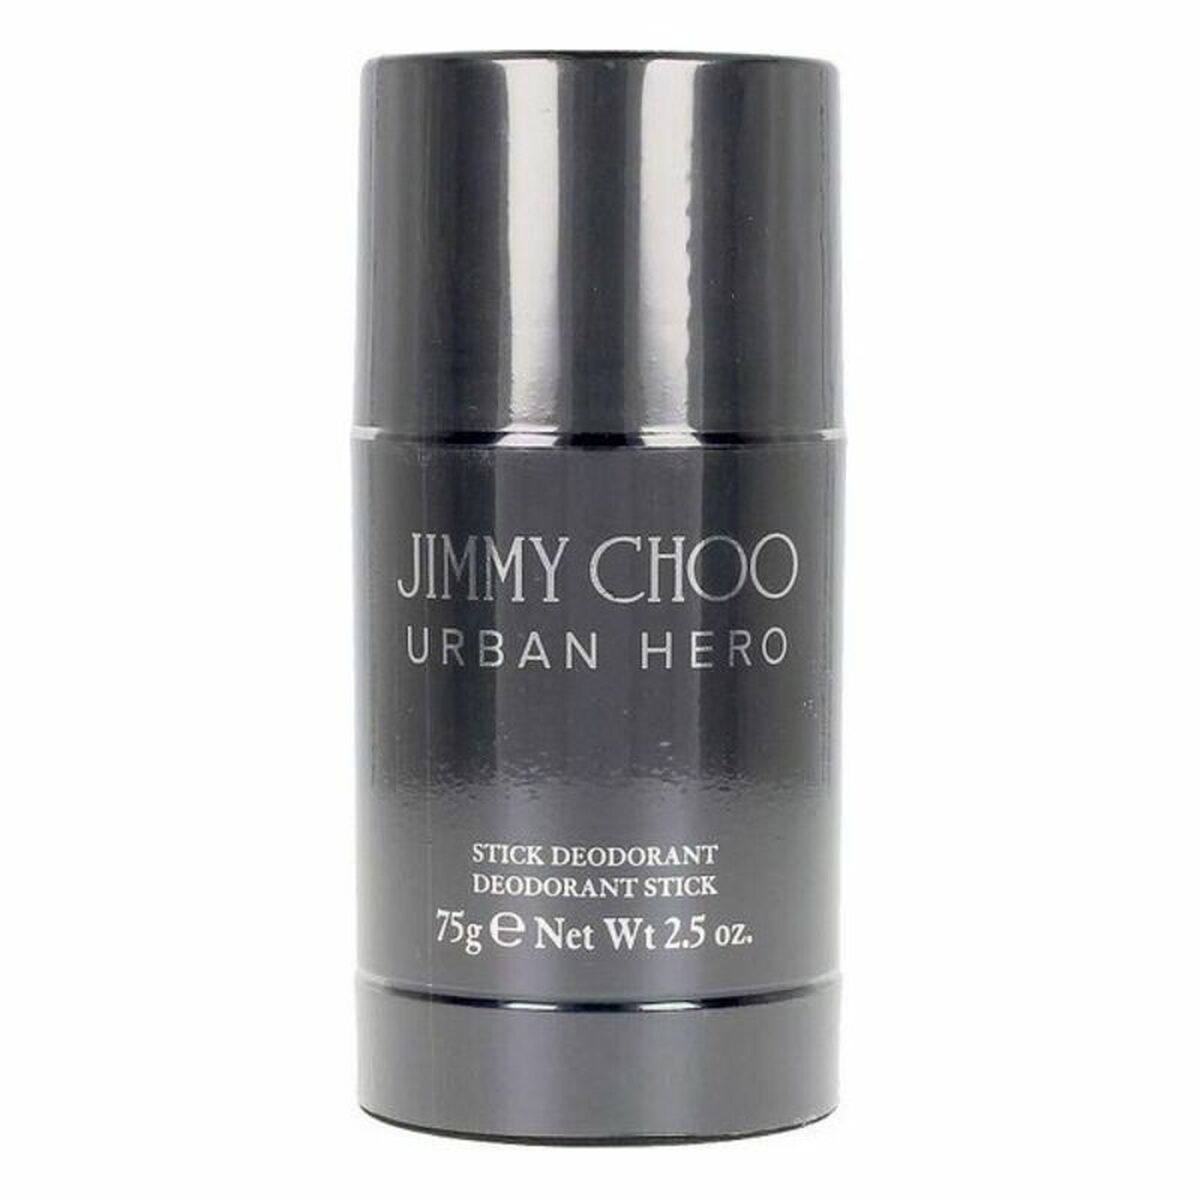 Déodorant en stick Urban Hero Jimmy Choo (75 g)